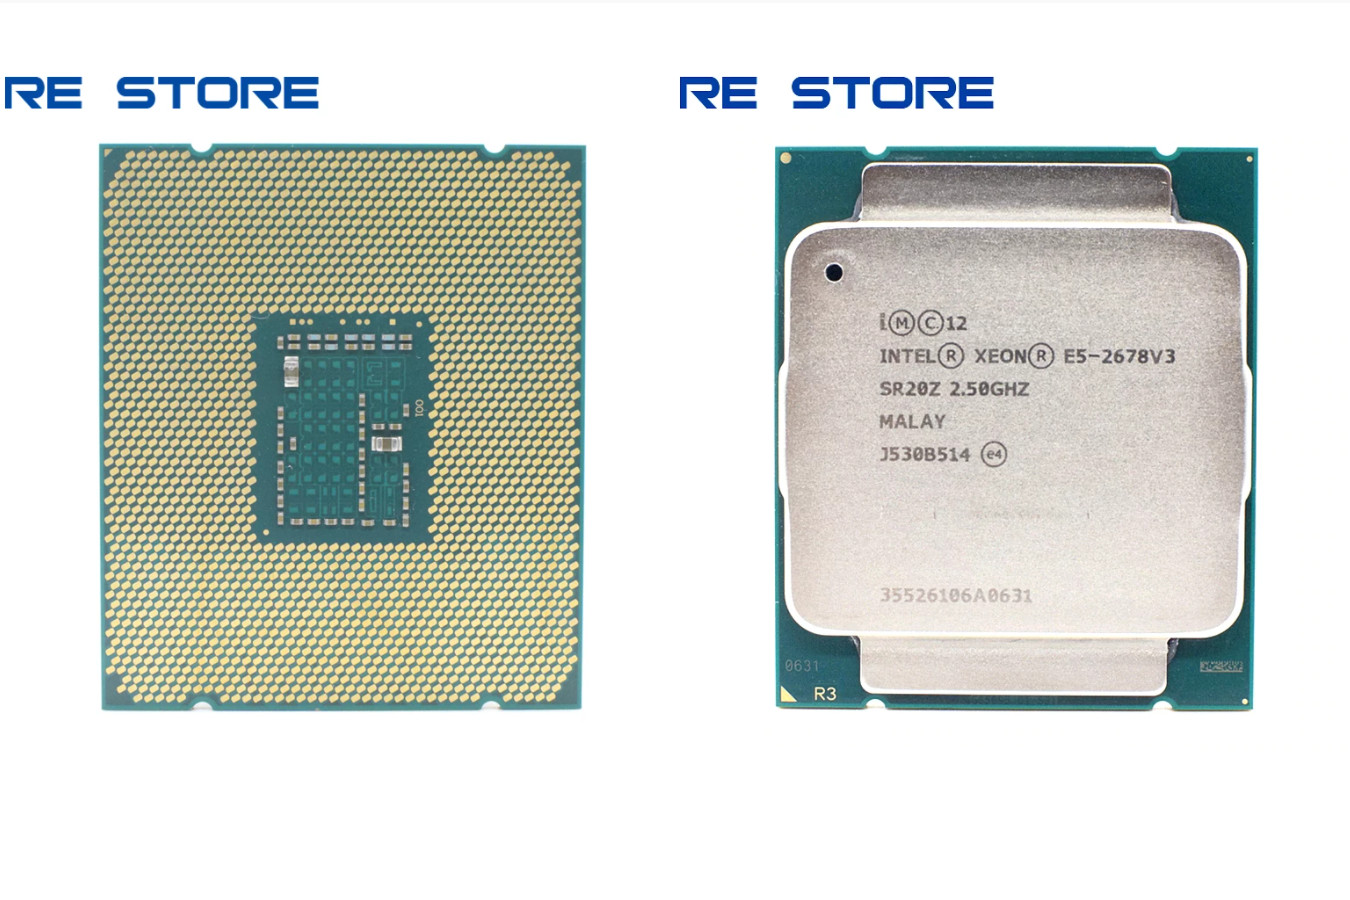 Средненький процессор — Intel Xeon E5 2678 V3